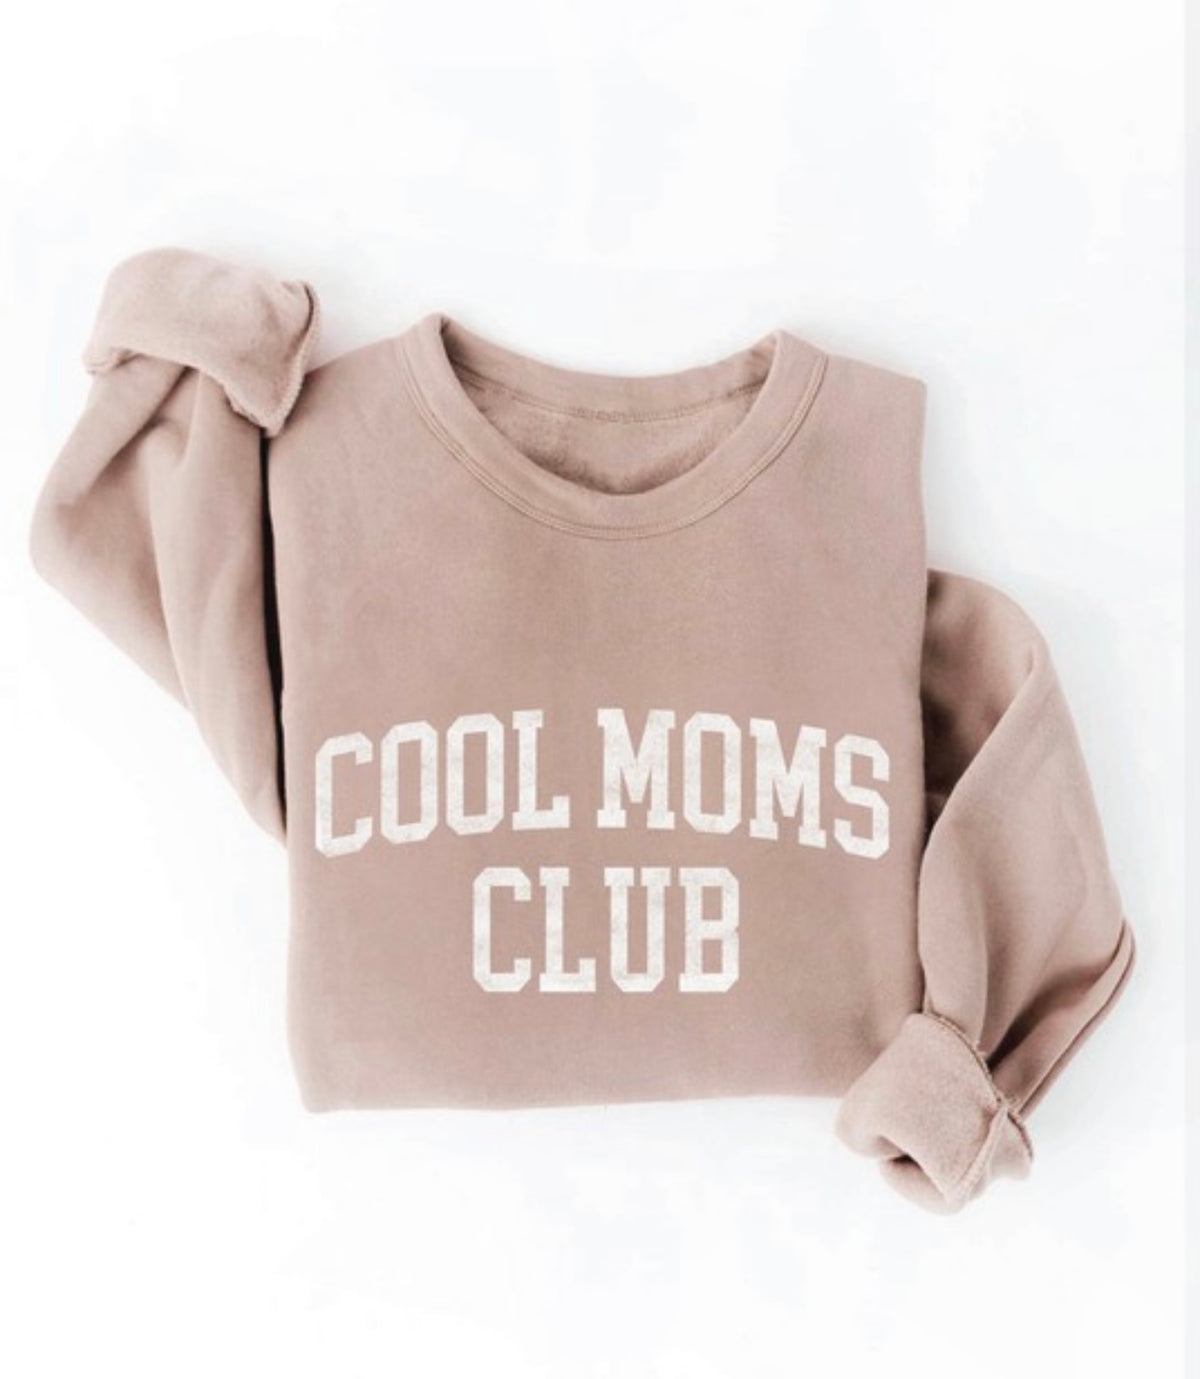 Cool moms sweatshirt in tan